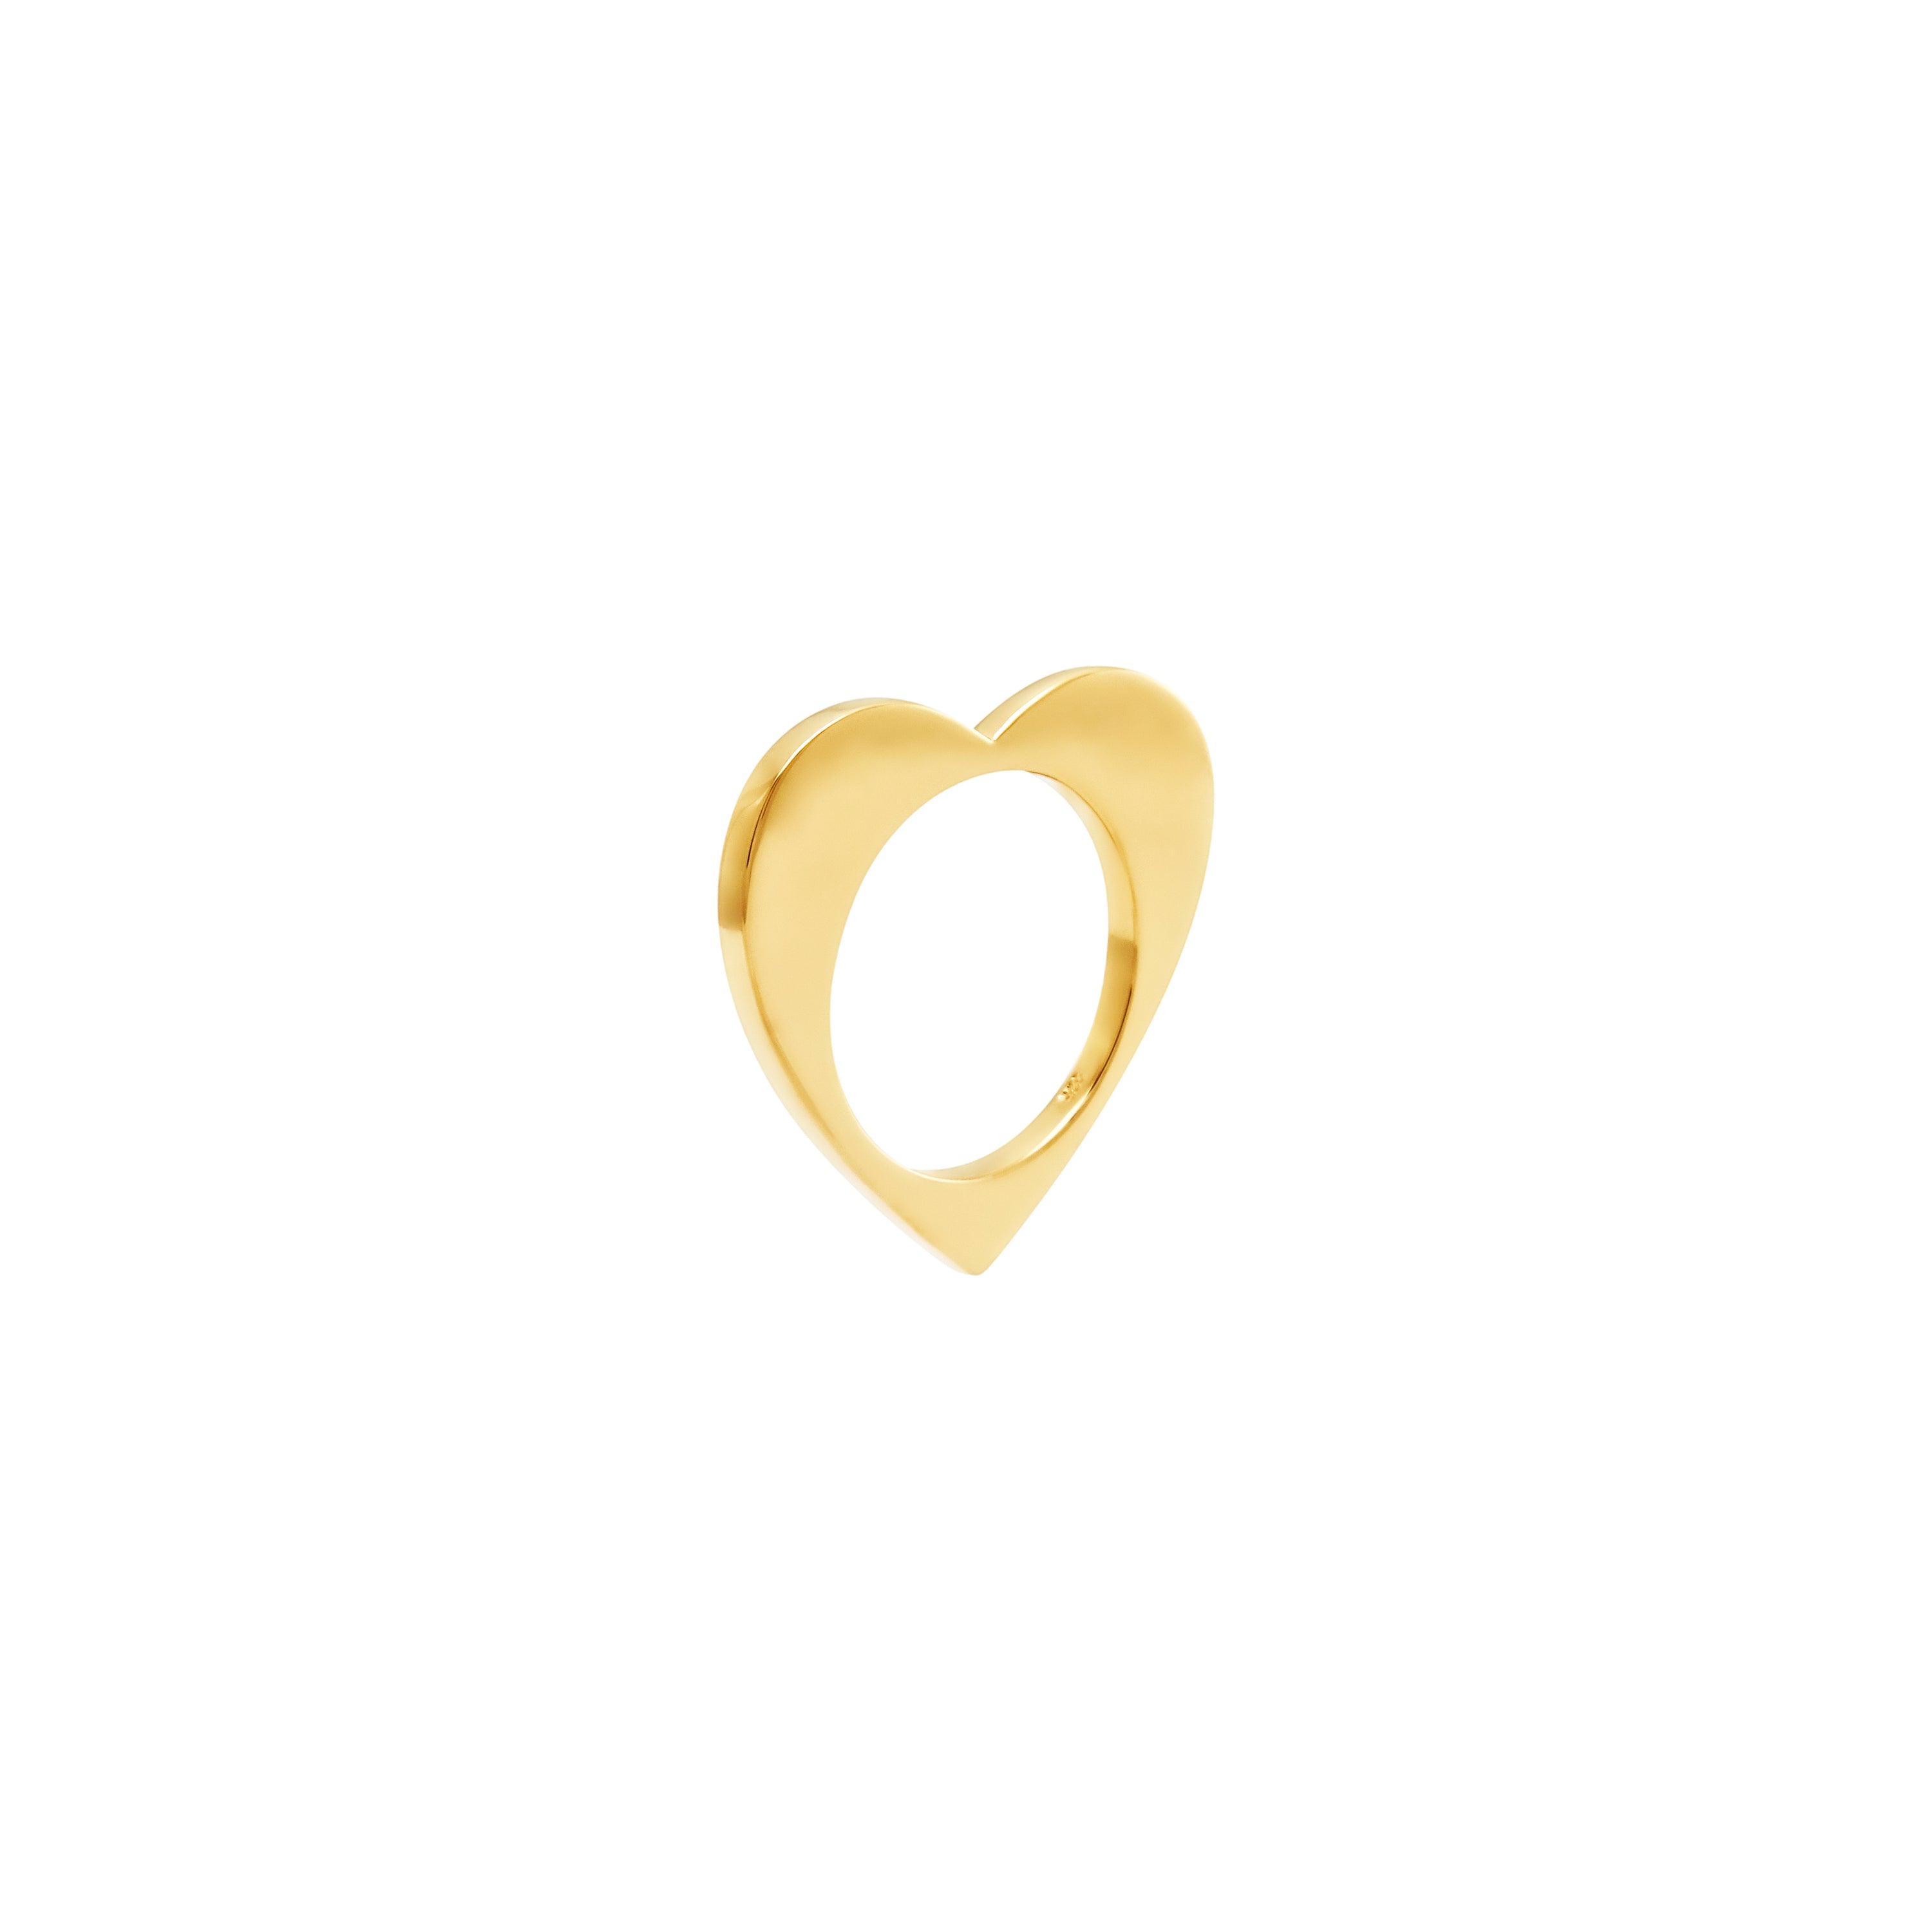 Romeus Heart Pendant / Charm. Gold Vermeil